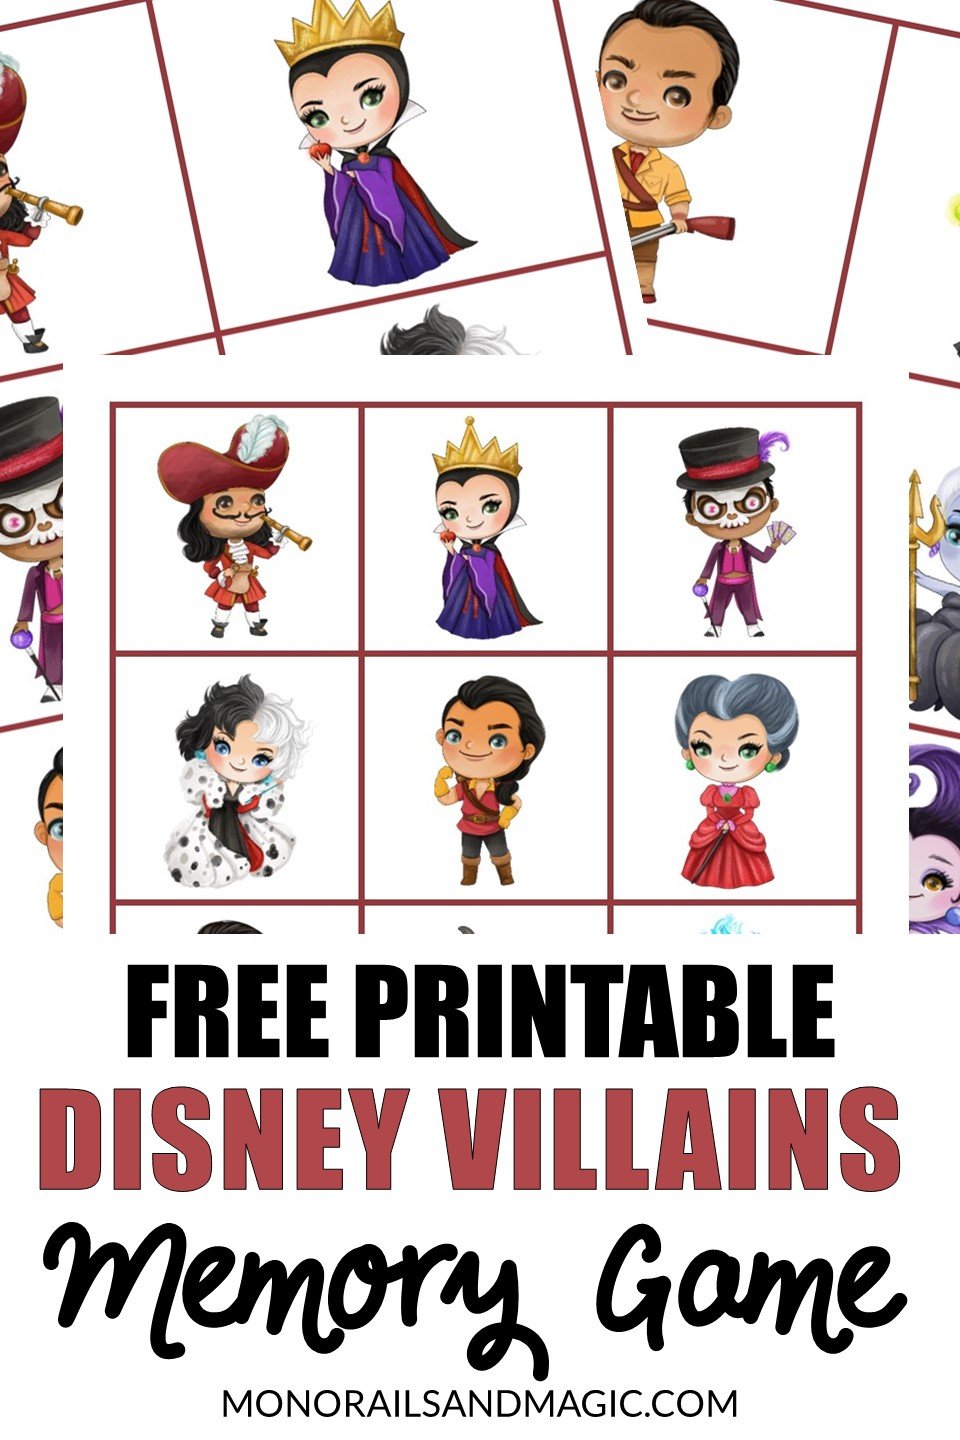 Free printable Disney villains memory game for kids.